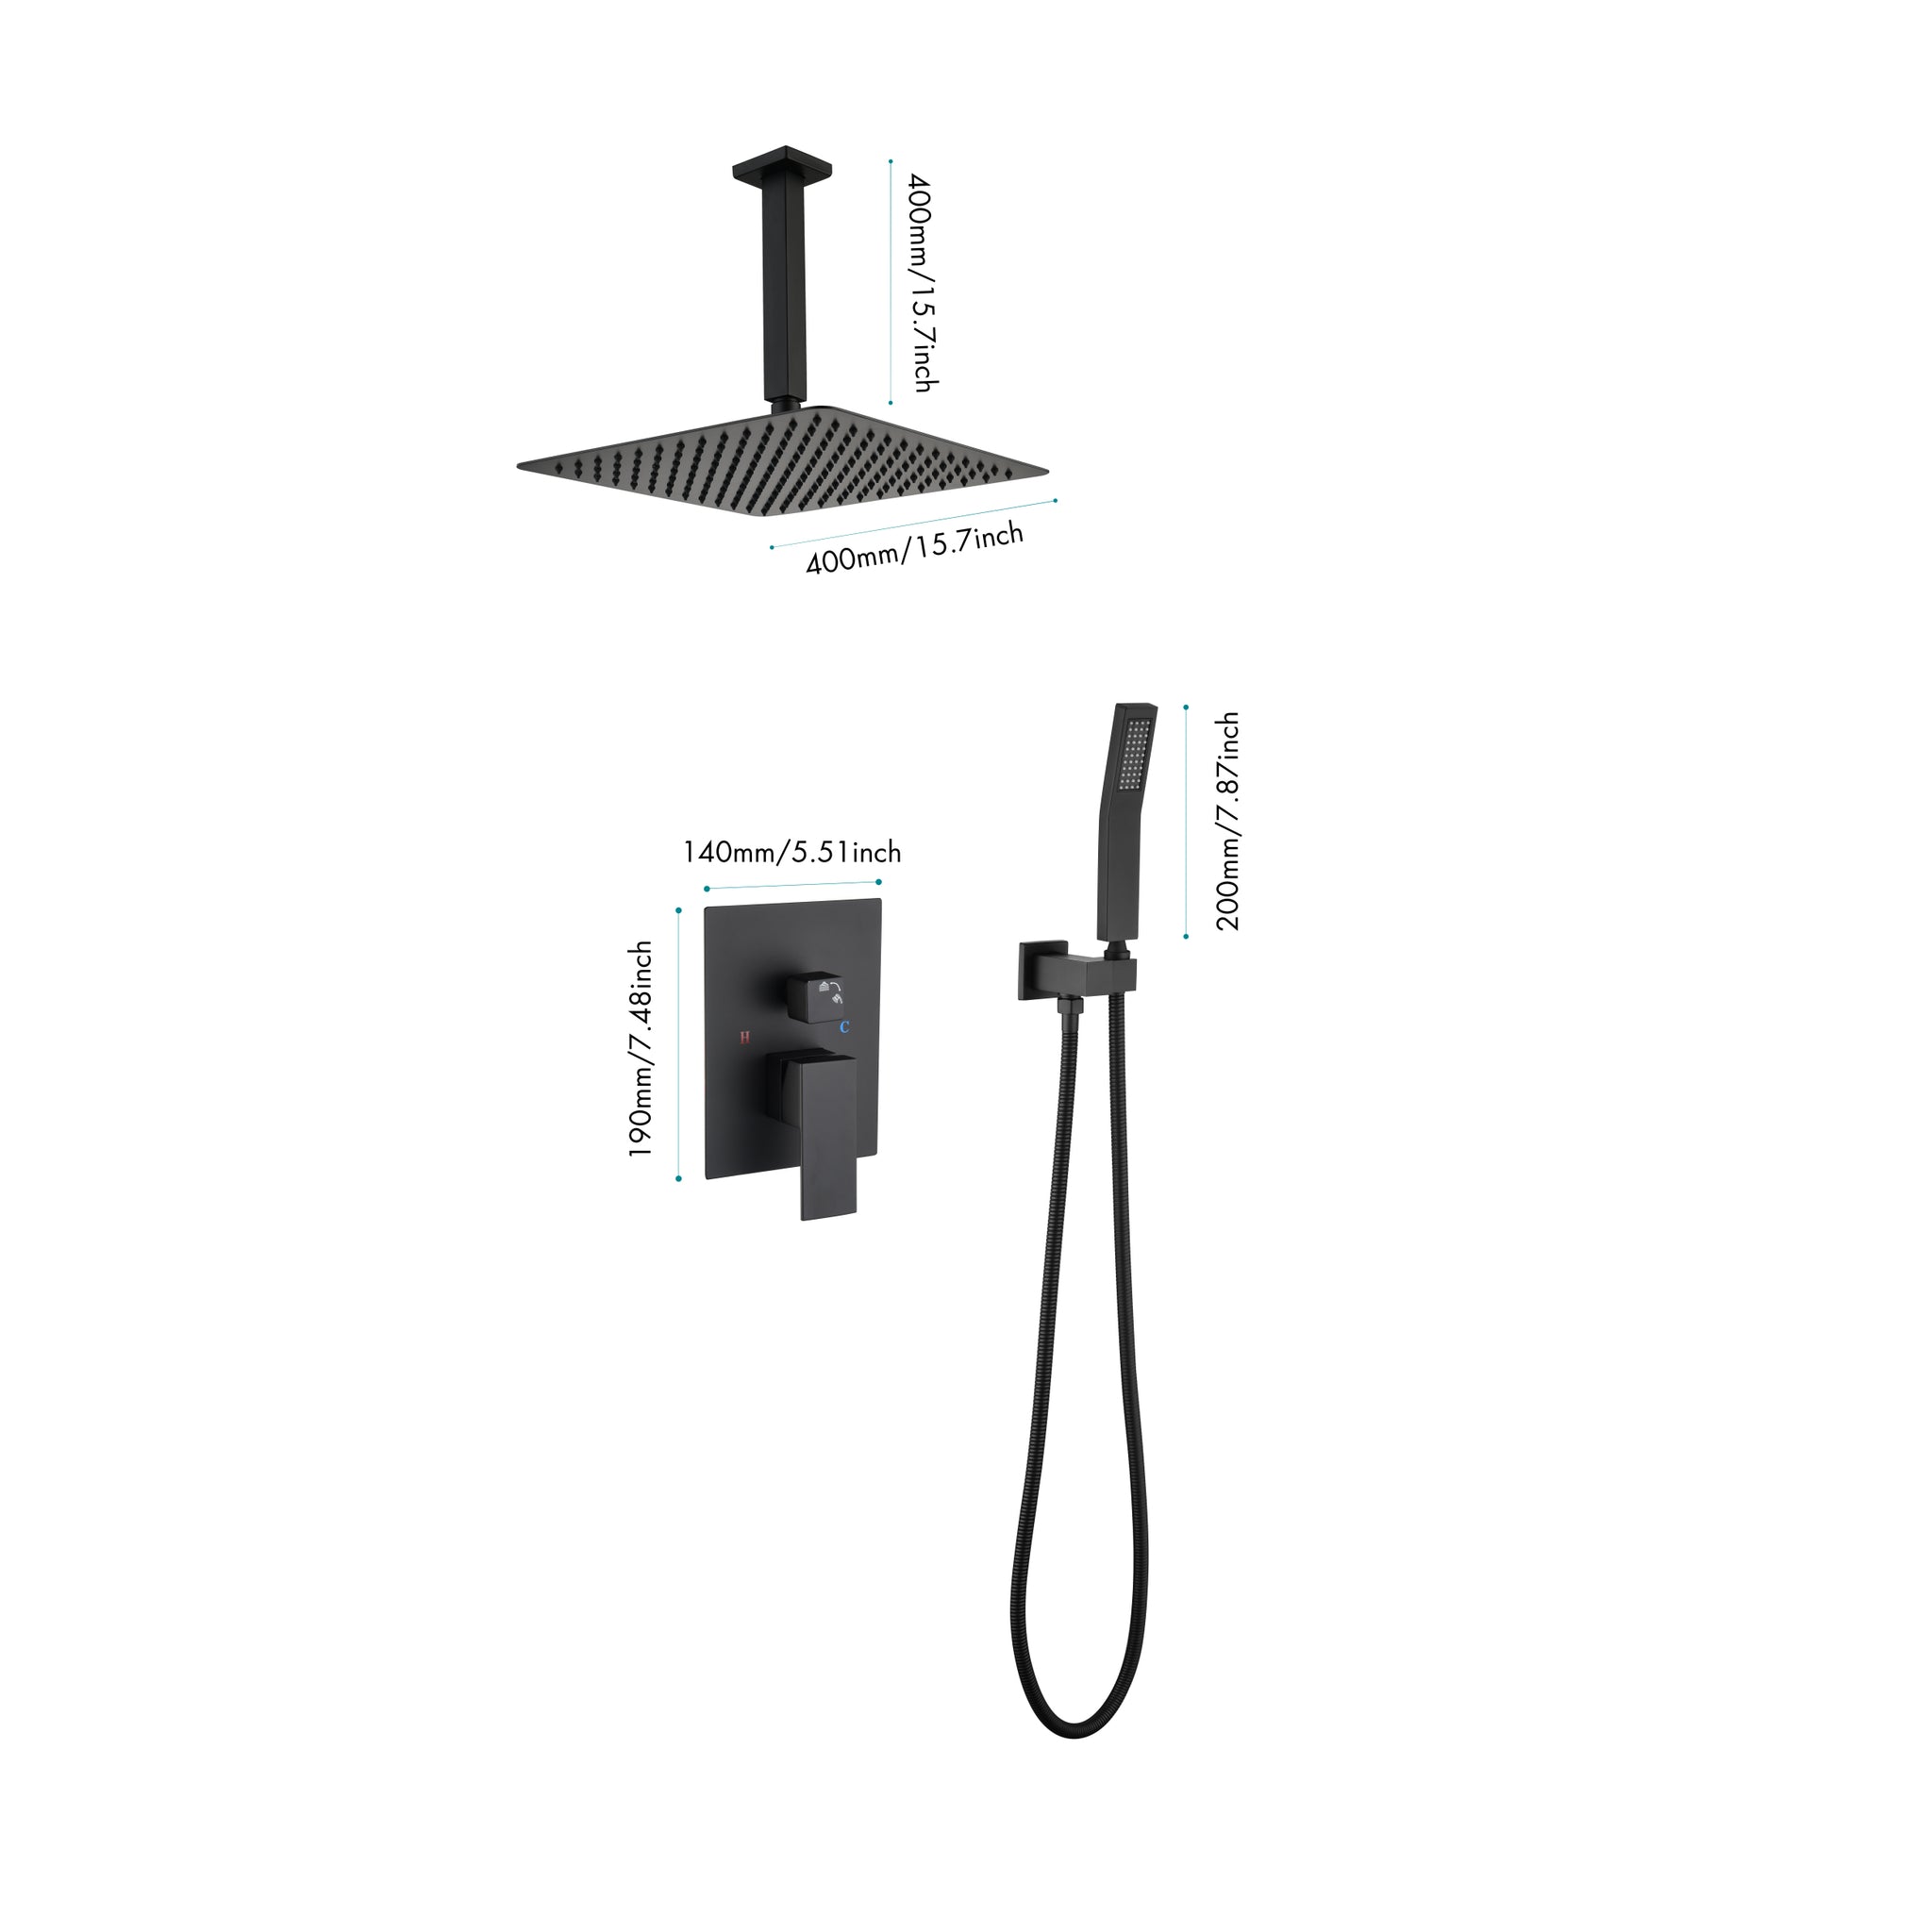 16 Inches Matte Black Shower Set System Bathroom matt black-brass